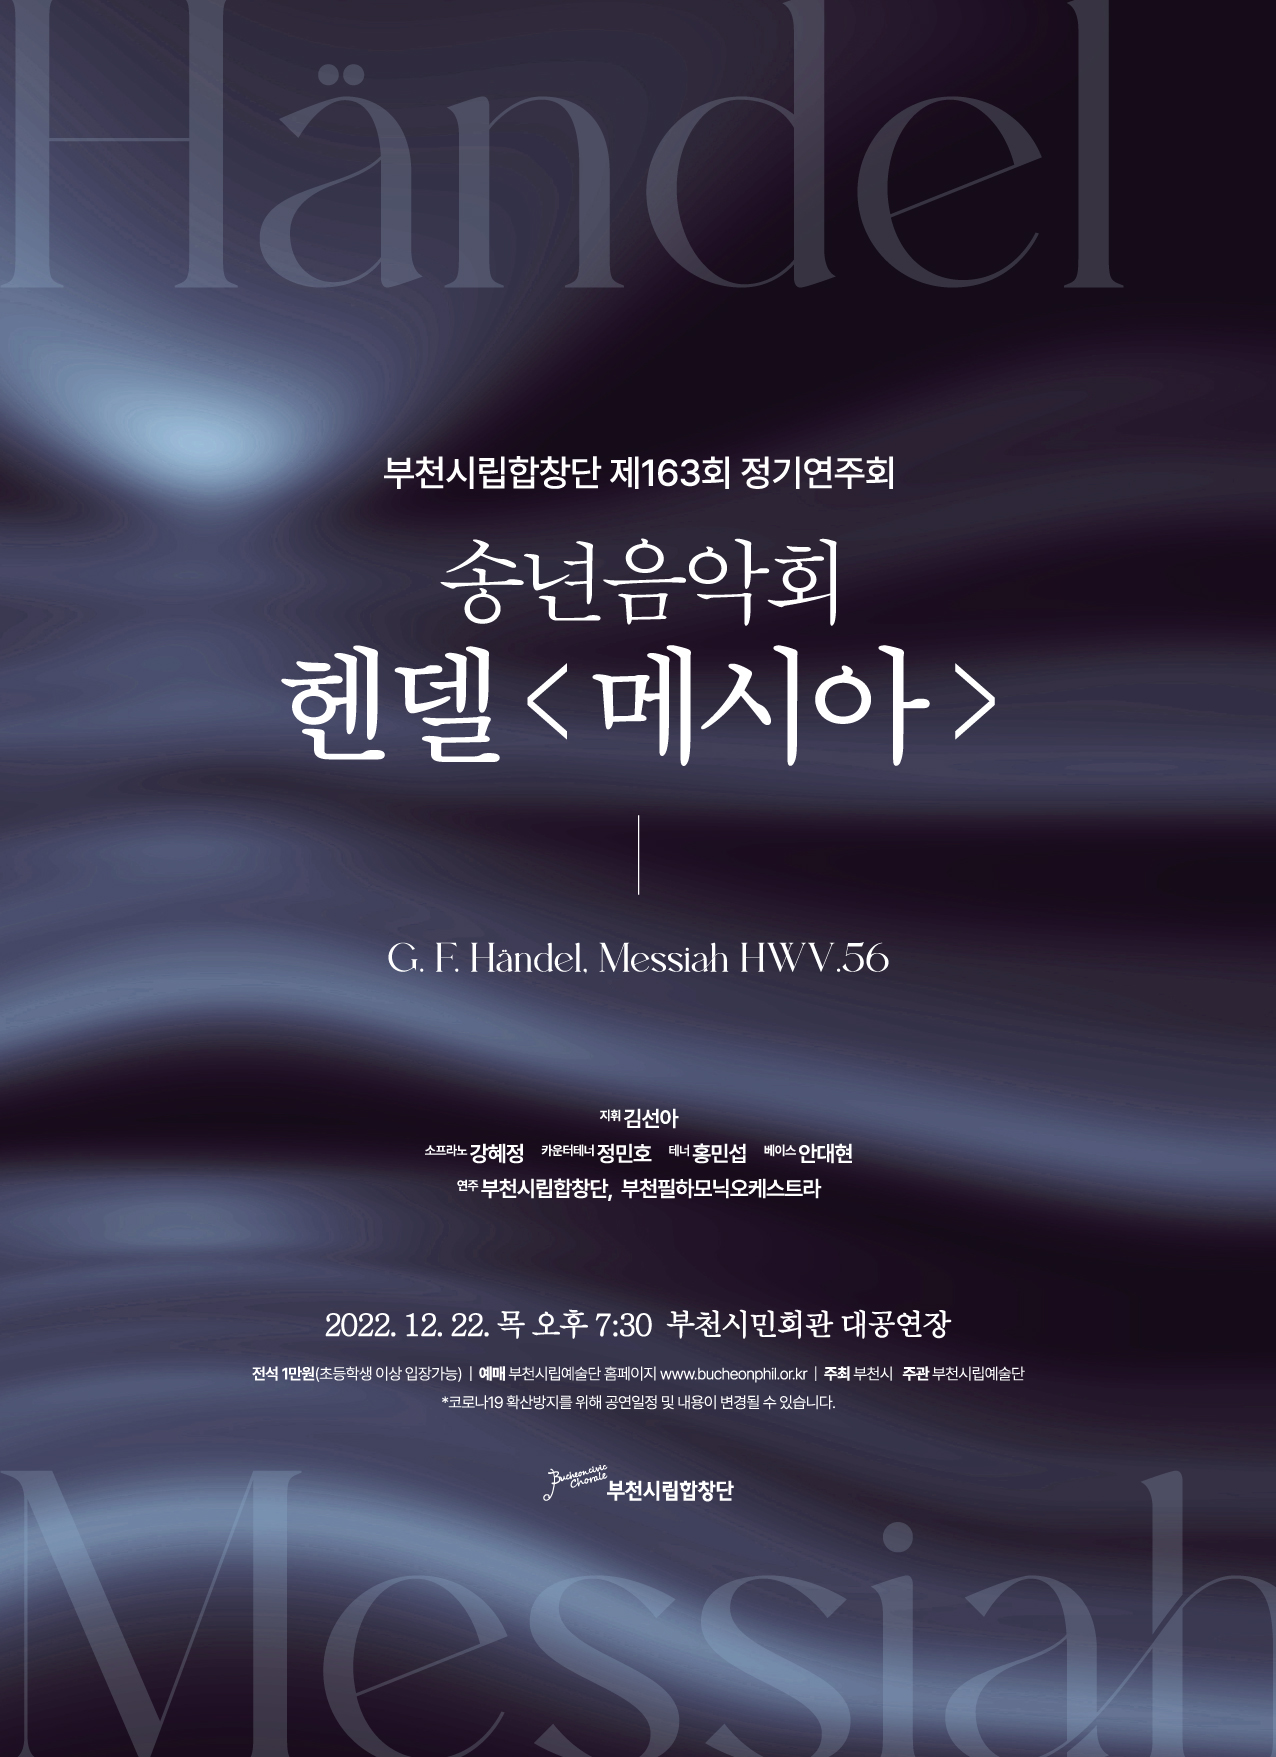 [12.22]Bucheon Civic Chorale 163rd Subscription Concert - Händel, Messiah